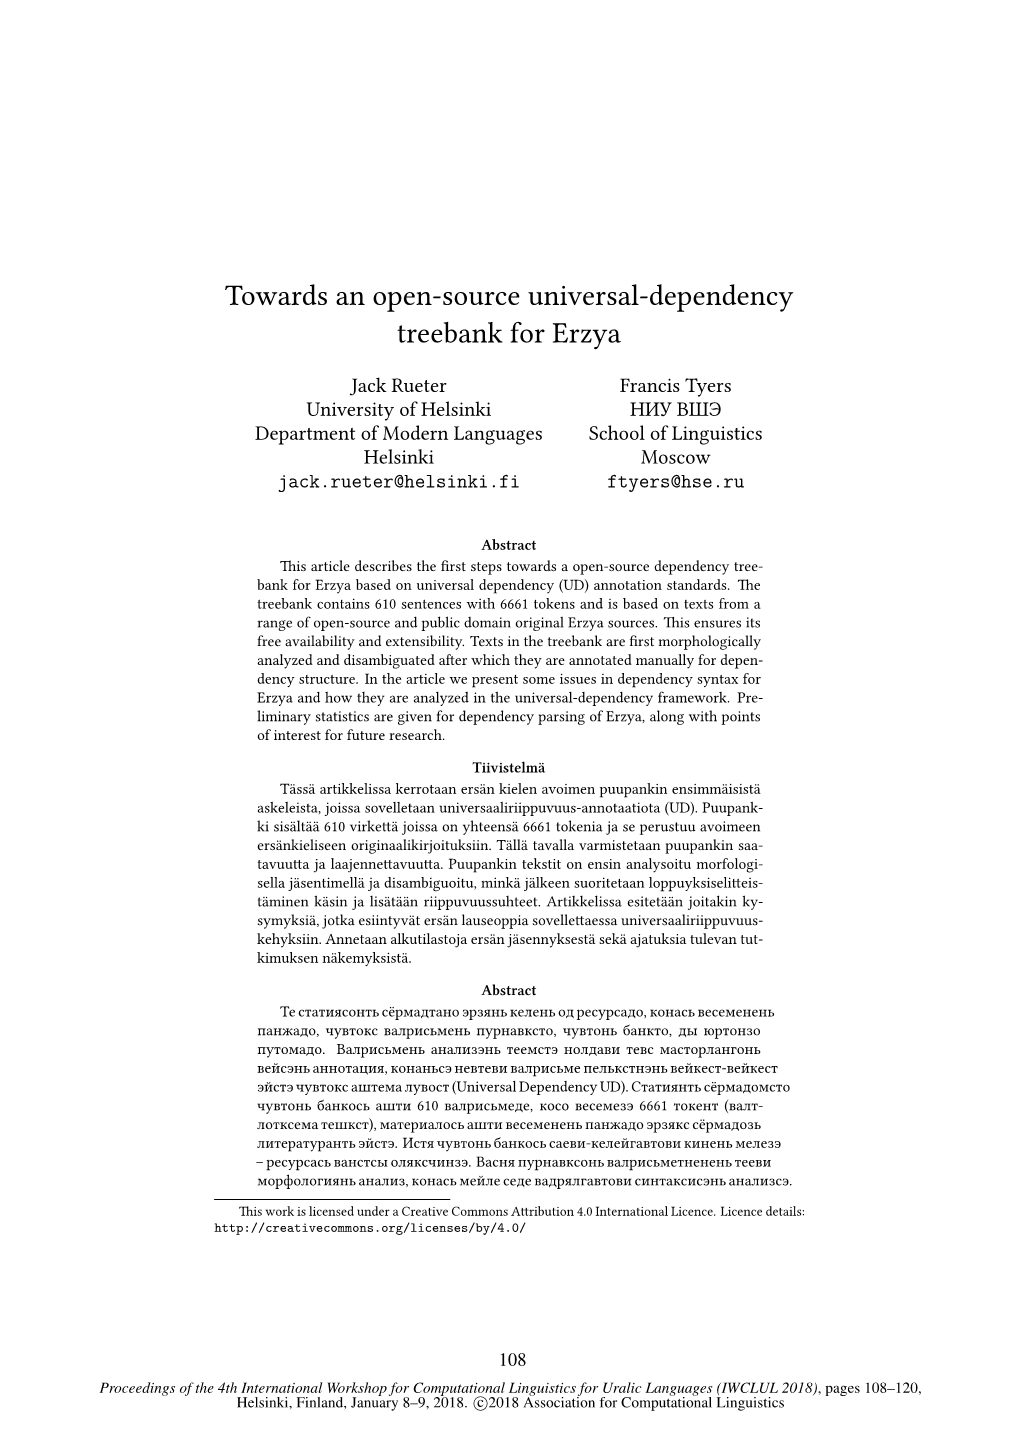 Towards an Open-Source Universal-Dependency Treebank for Erzya